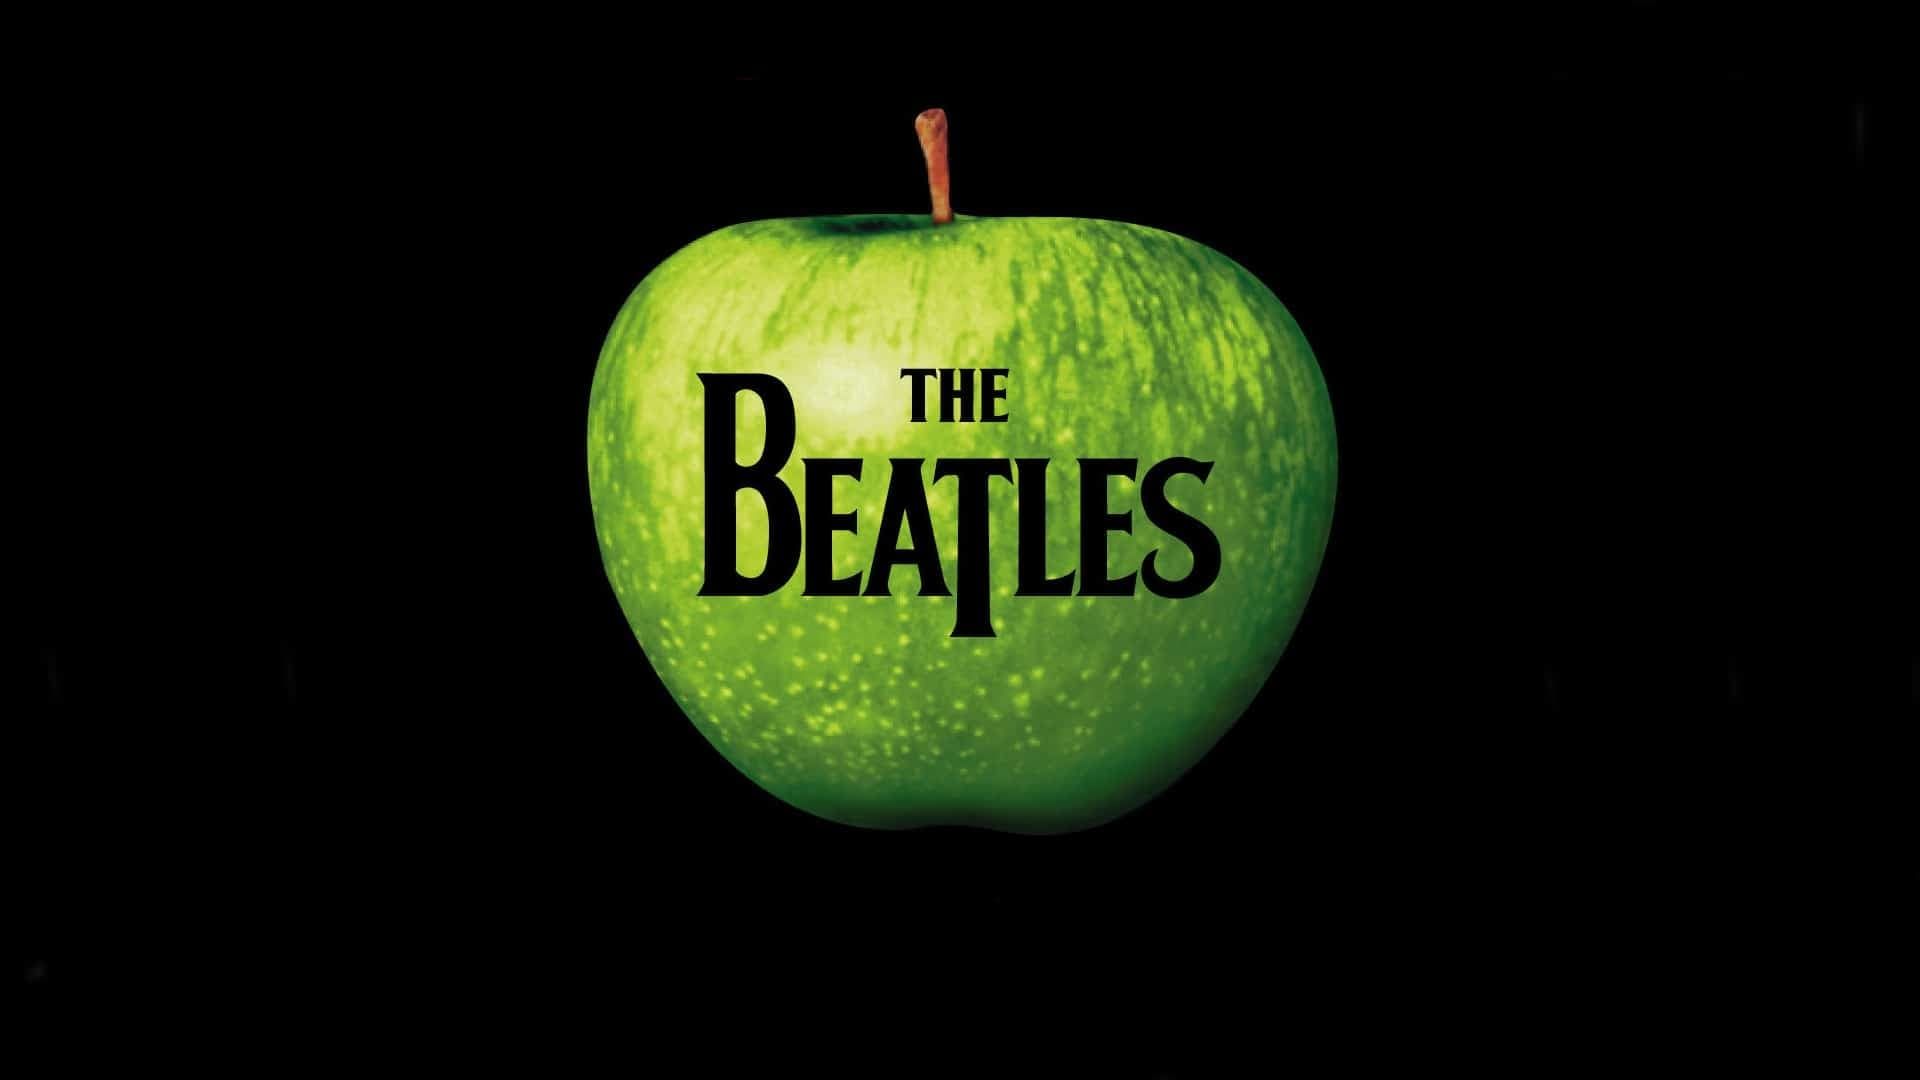 Strange Fruit: The Beatles' Apple Records background